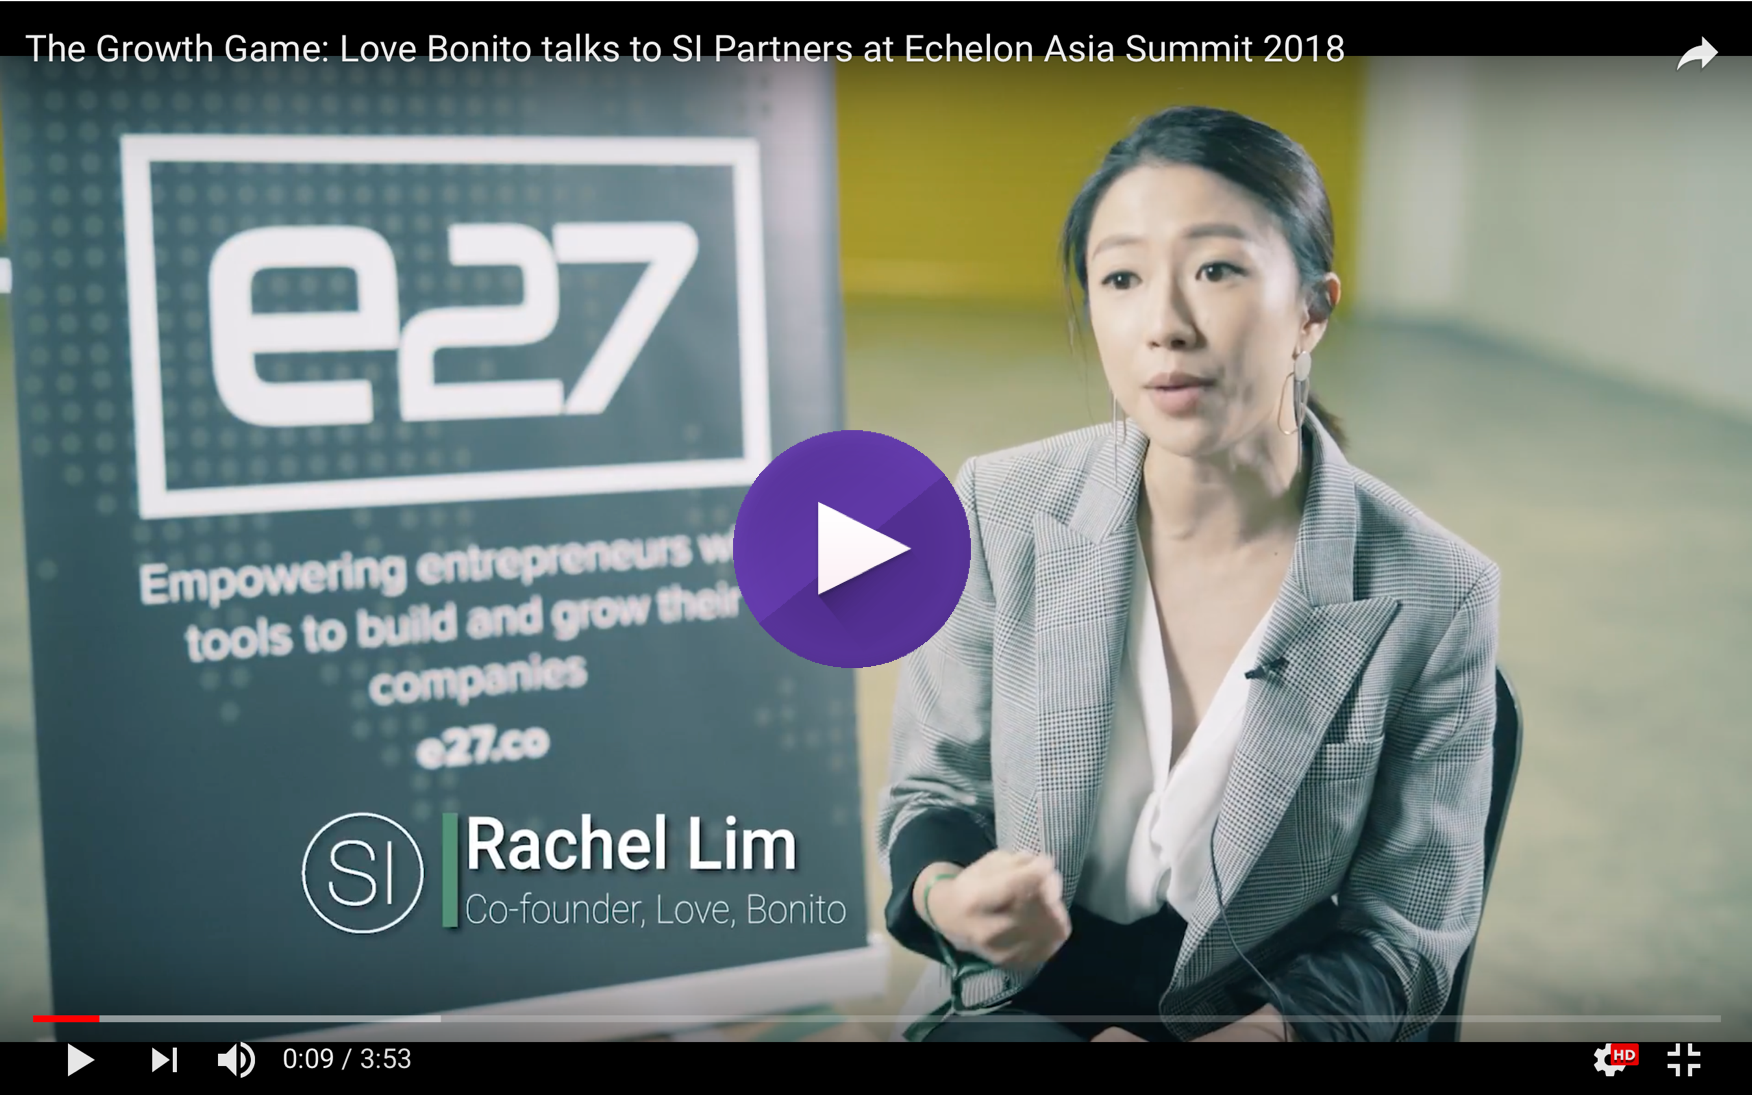 Watch: The Growth Game- Rachel Lim